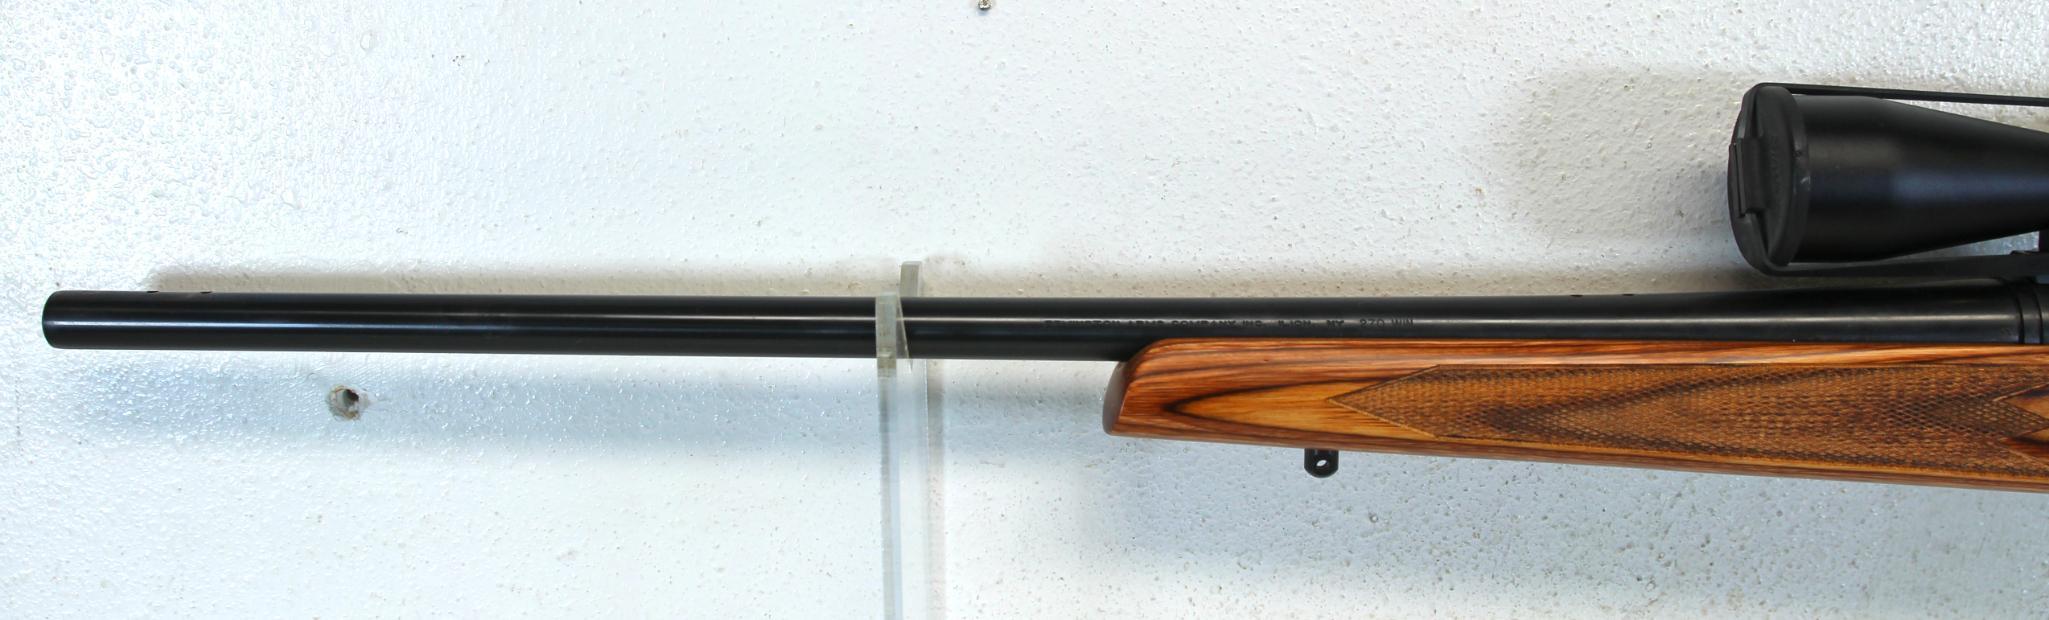 Remington Model 700 .270 Win. Bolt Action Rifle w/Burris 3X-9X Fullfield Scope Checkered Laminated